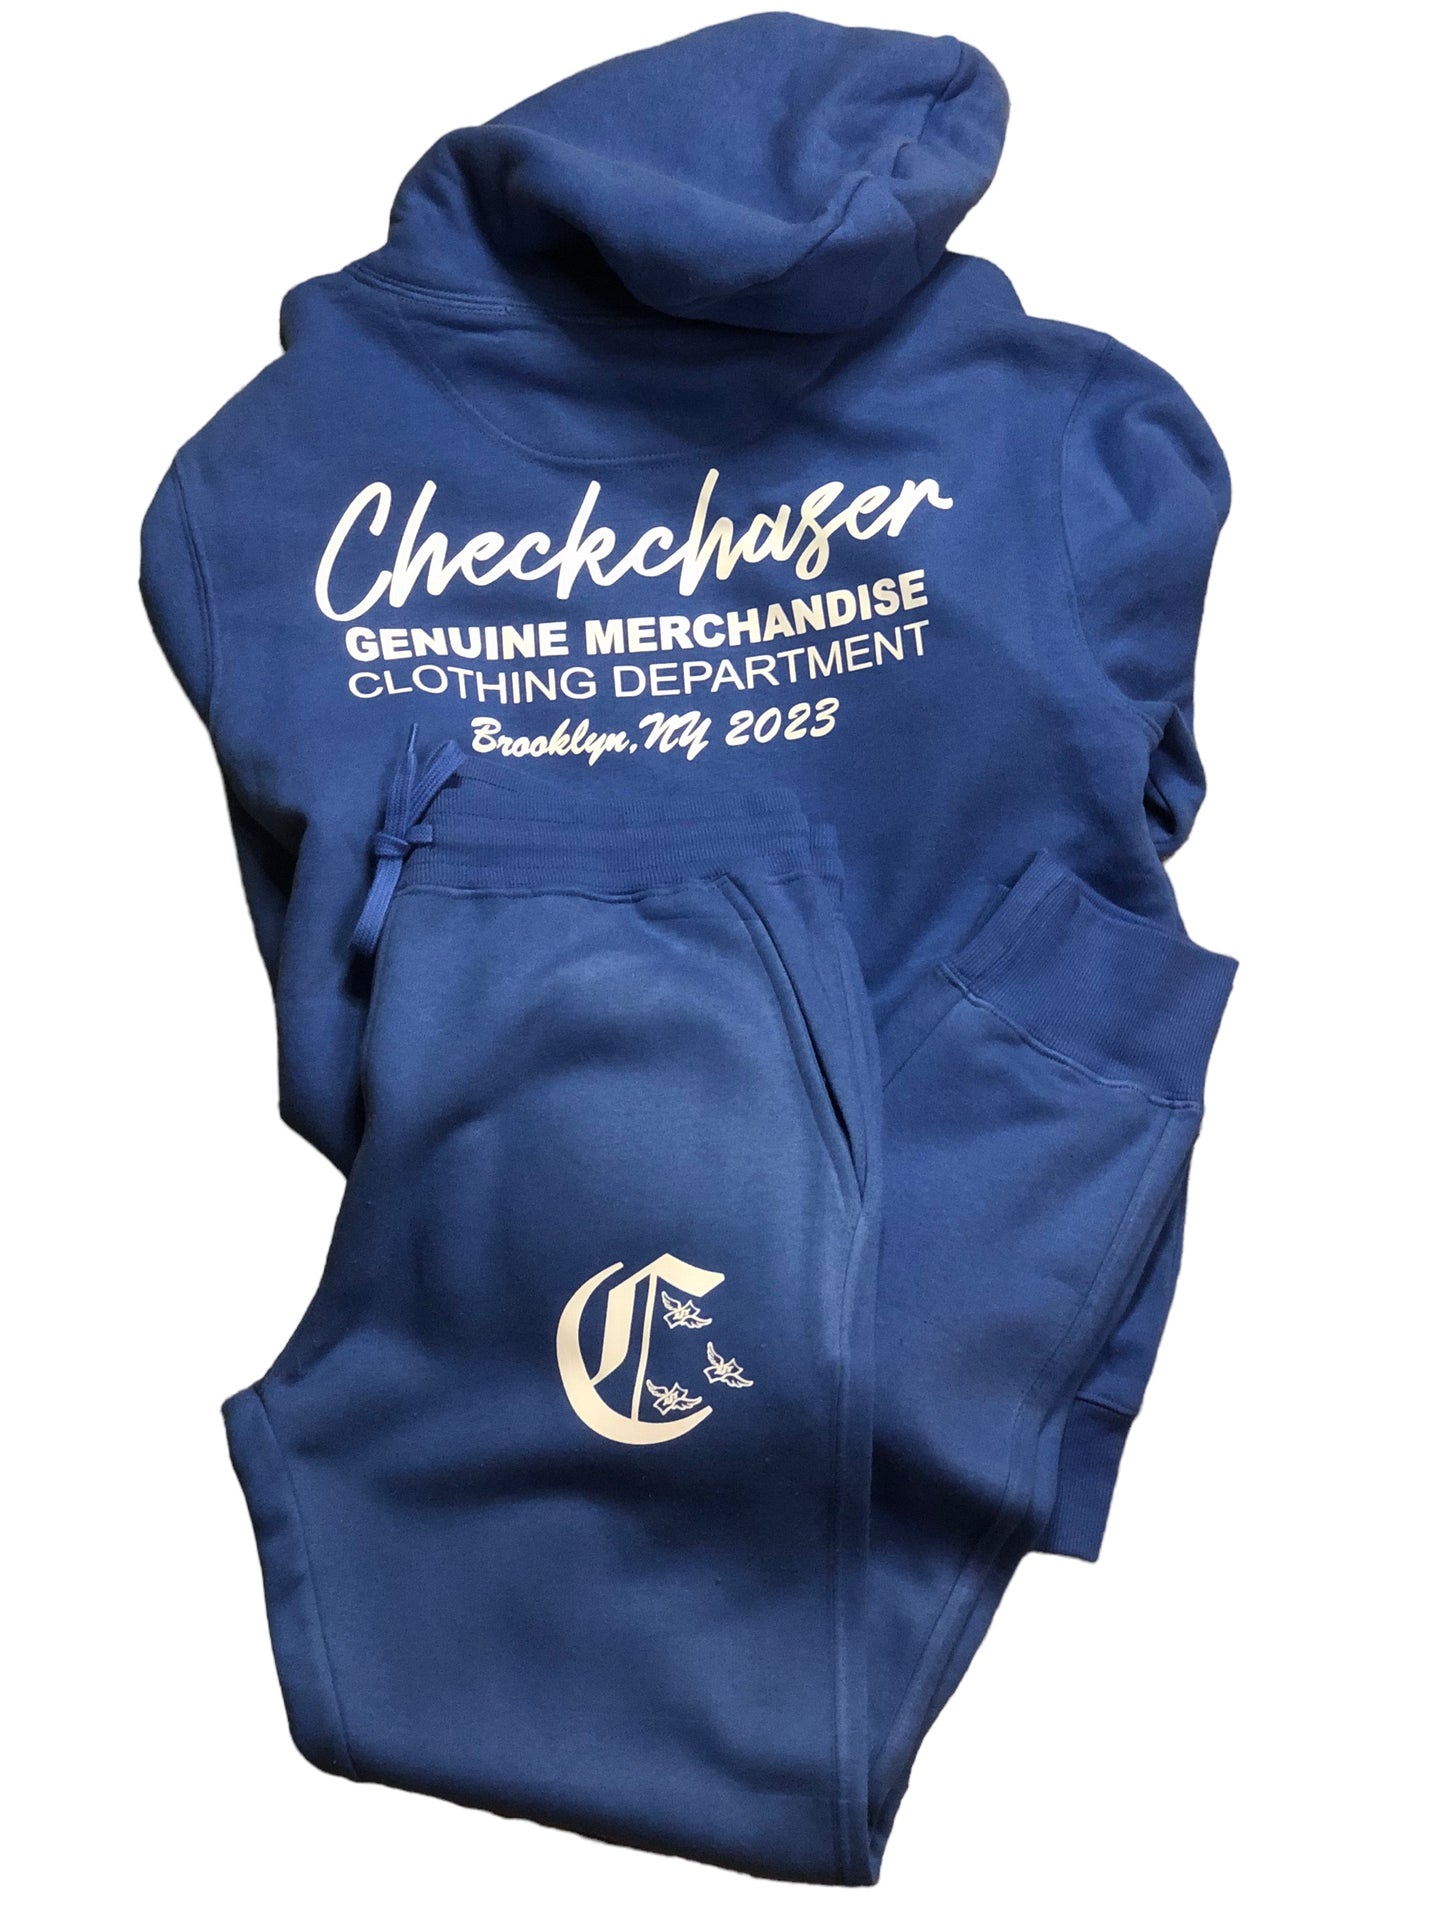 Checkchaser “Genuine Merchandise v2” Sweatsuit